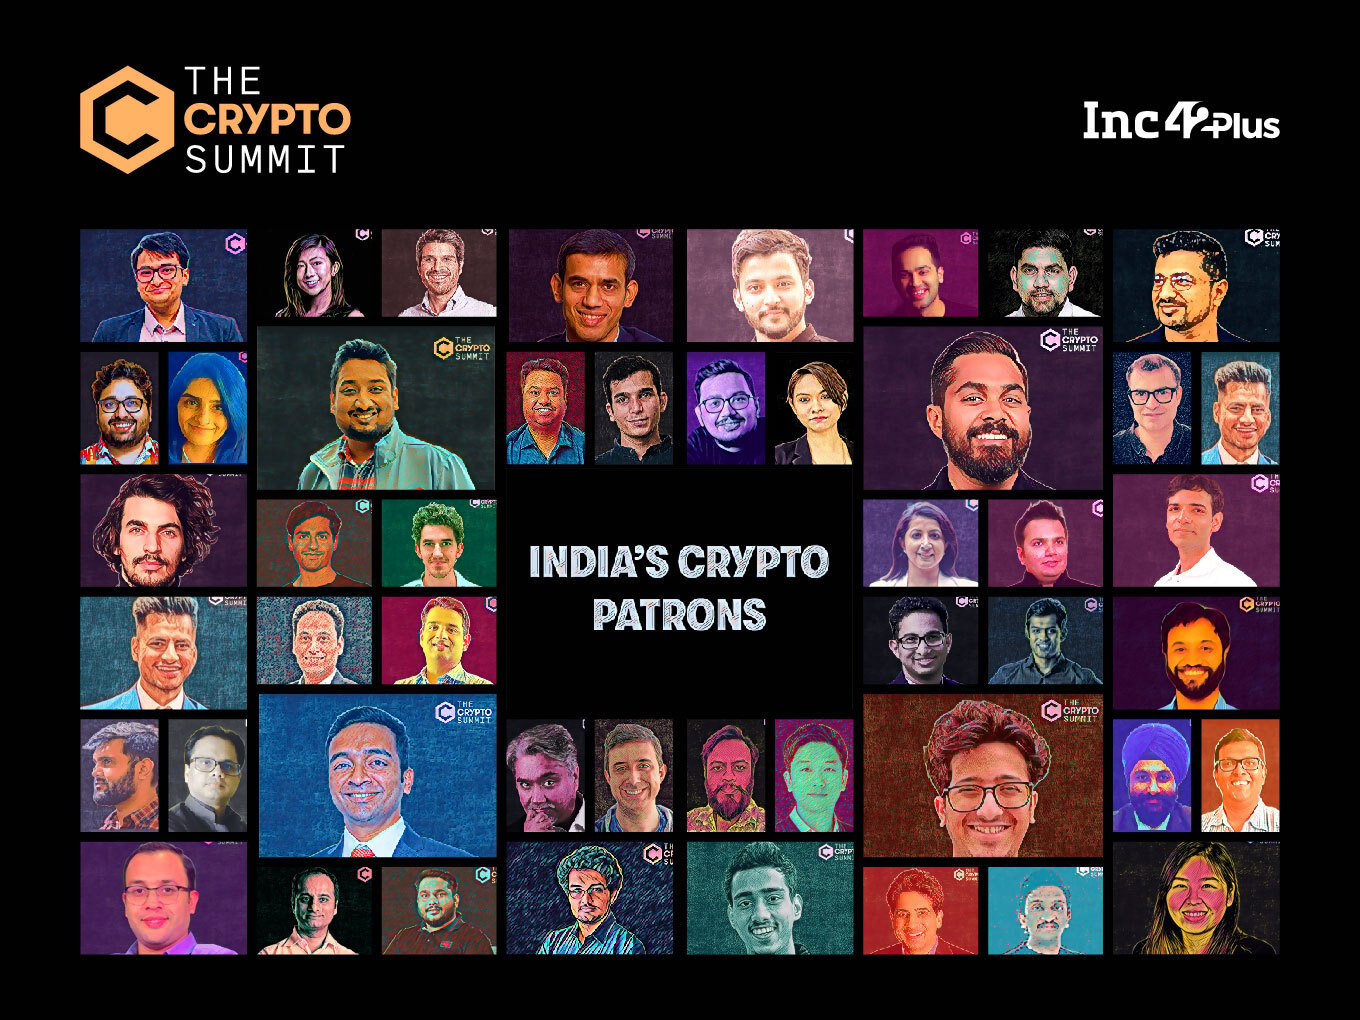 India crypto patrons inc42